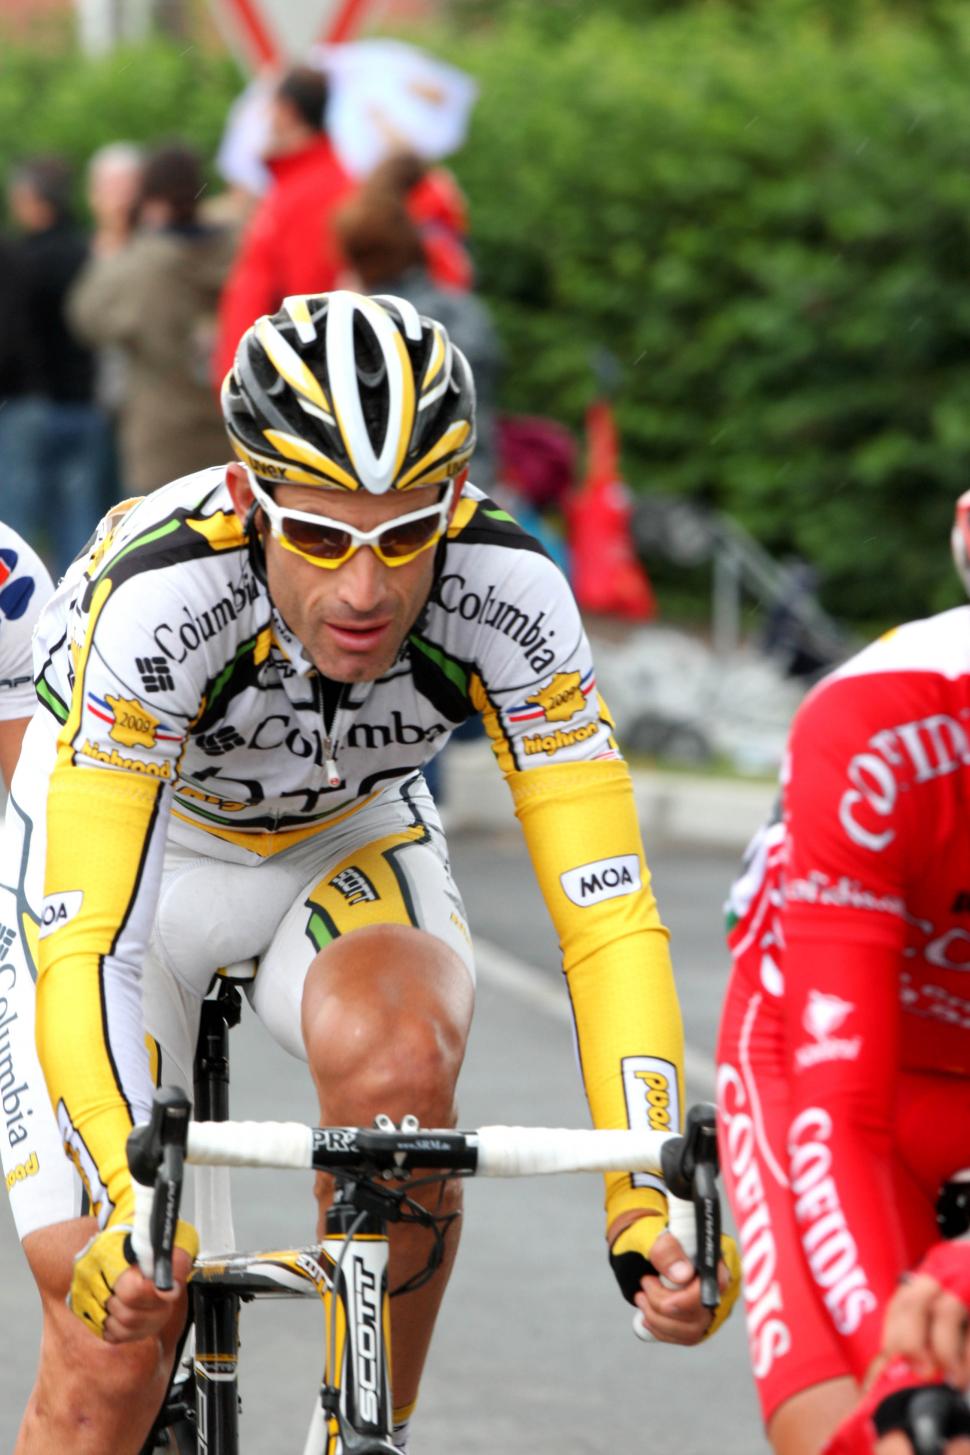 Hincapie to retire in August after breaking Tour de France